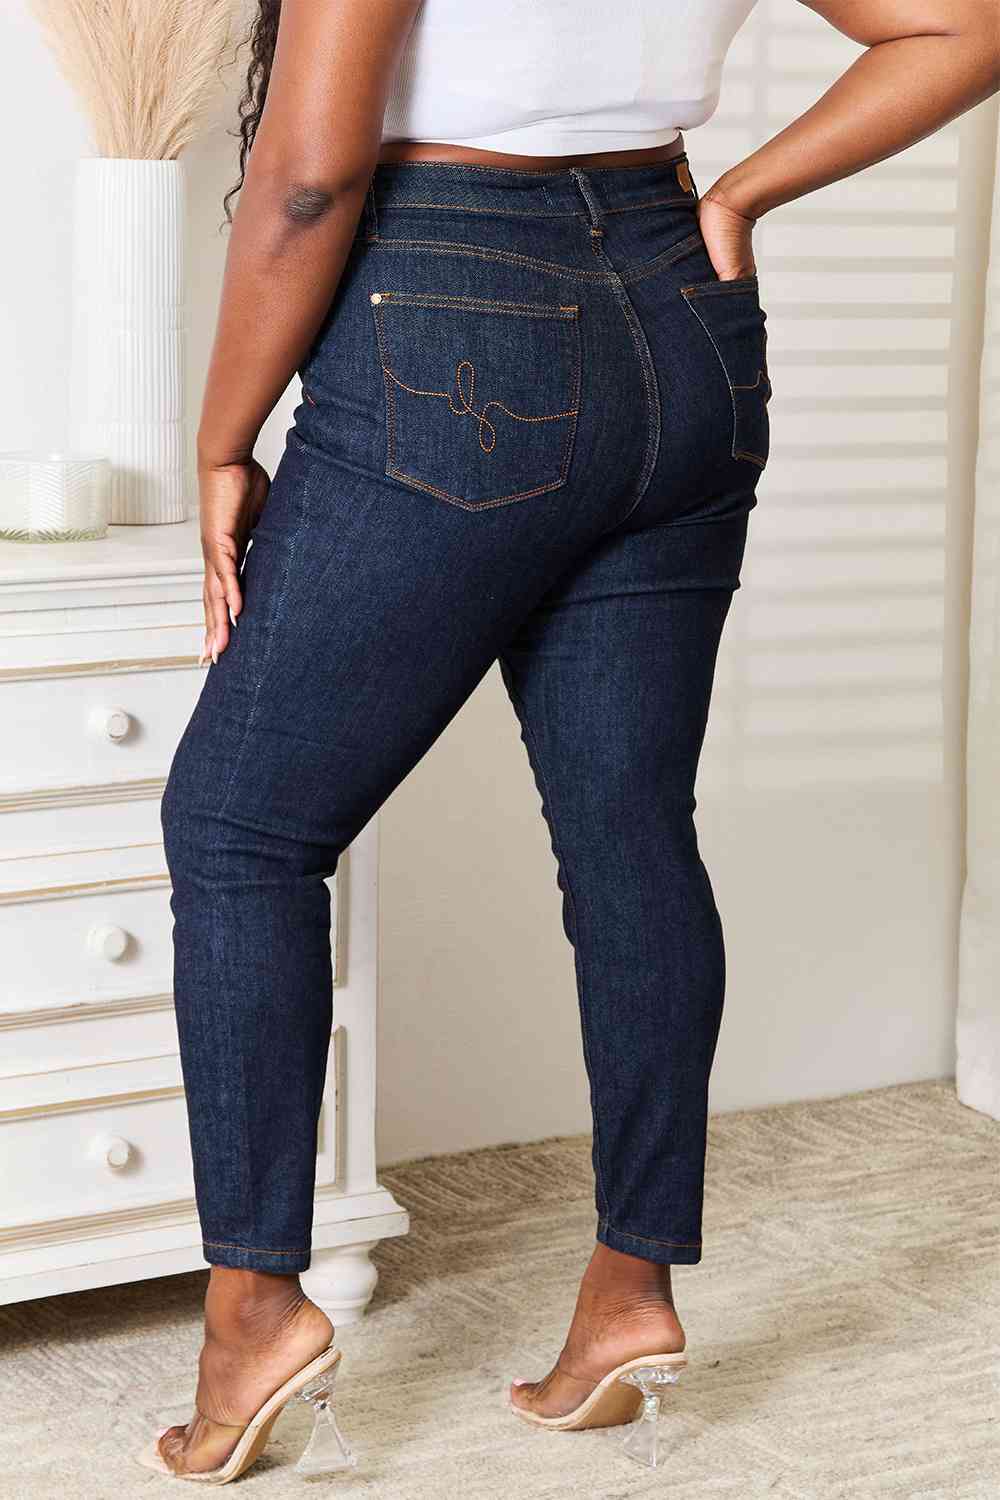 ITEM MUDT SHIP Judy Blue Full Size High Waist Pocket Embroidered Skinny Jeans